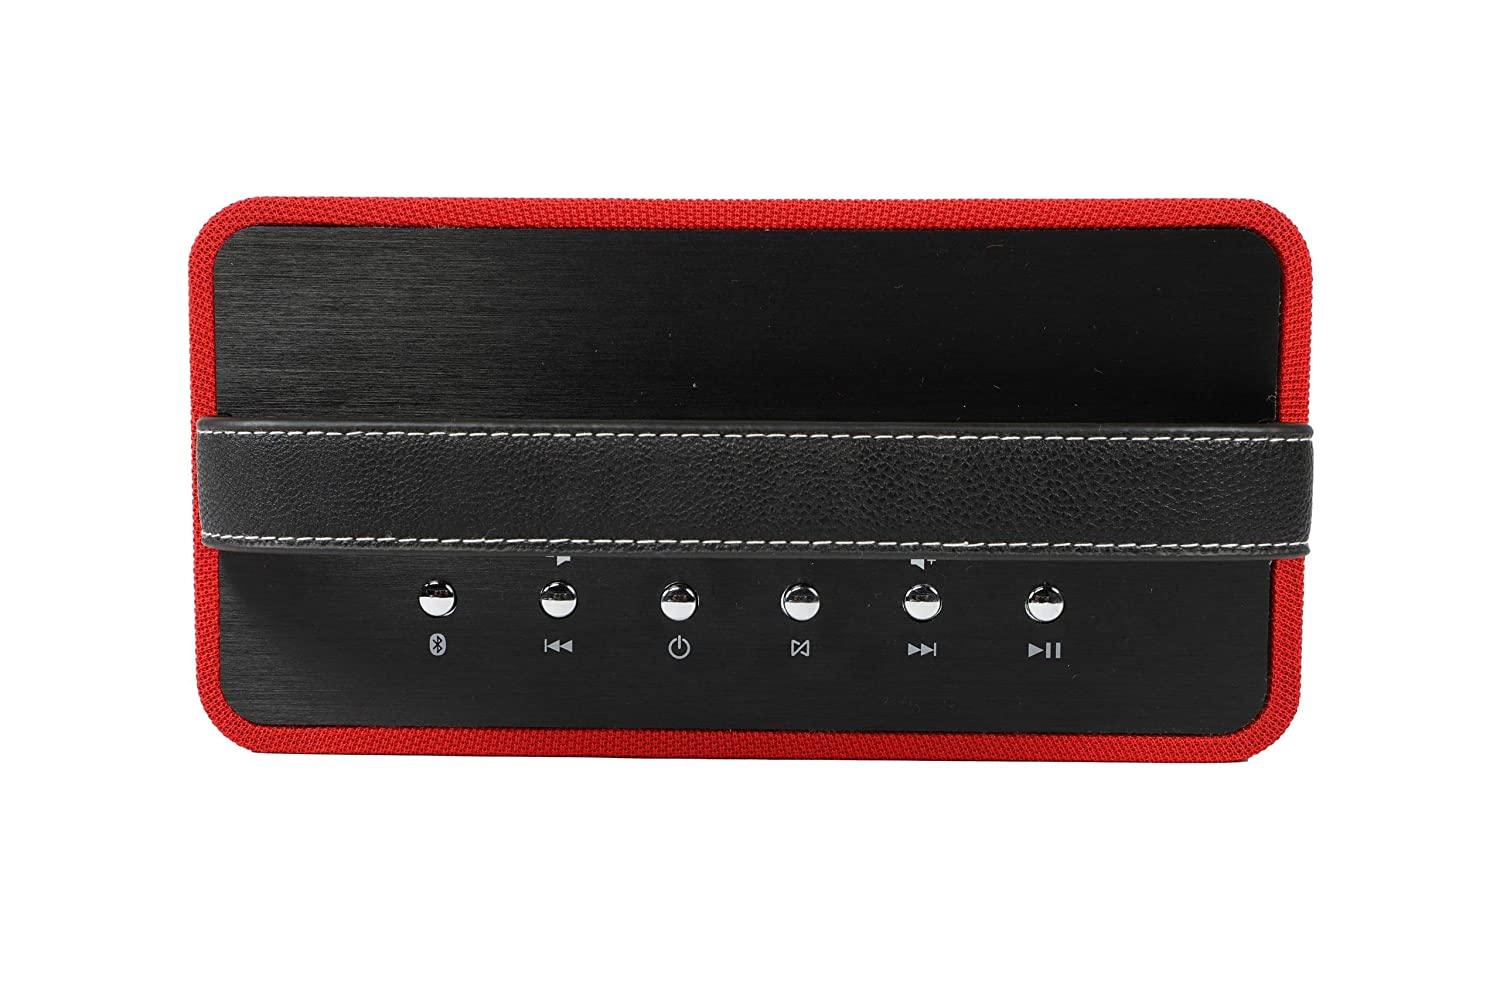 Altec Lansing AL-1002A Super Bass Wireless Poratbel Bluetooth Trolley Party Speaker - Red-Bluetooth Speakers-dealsplant